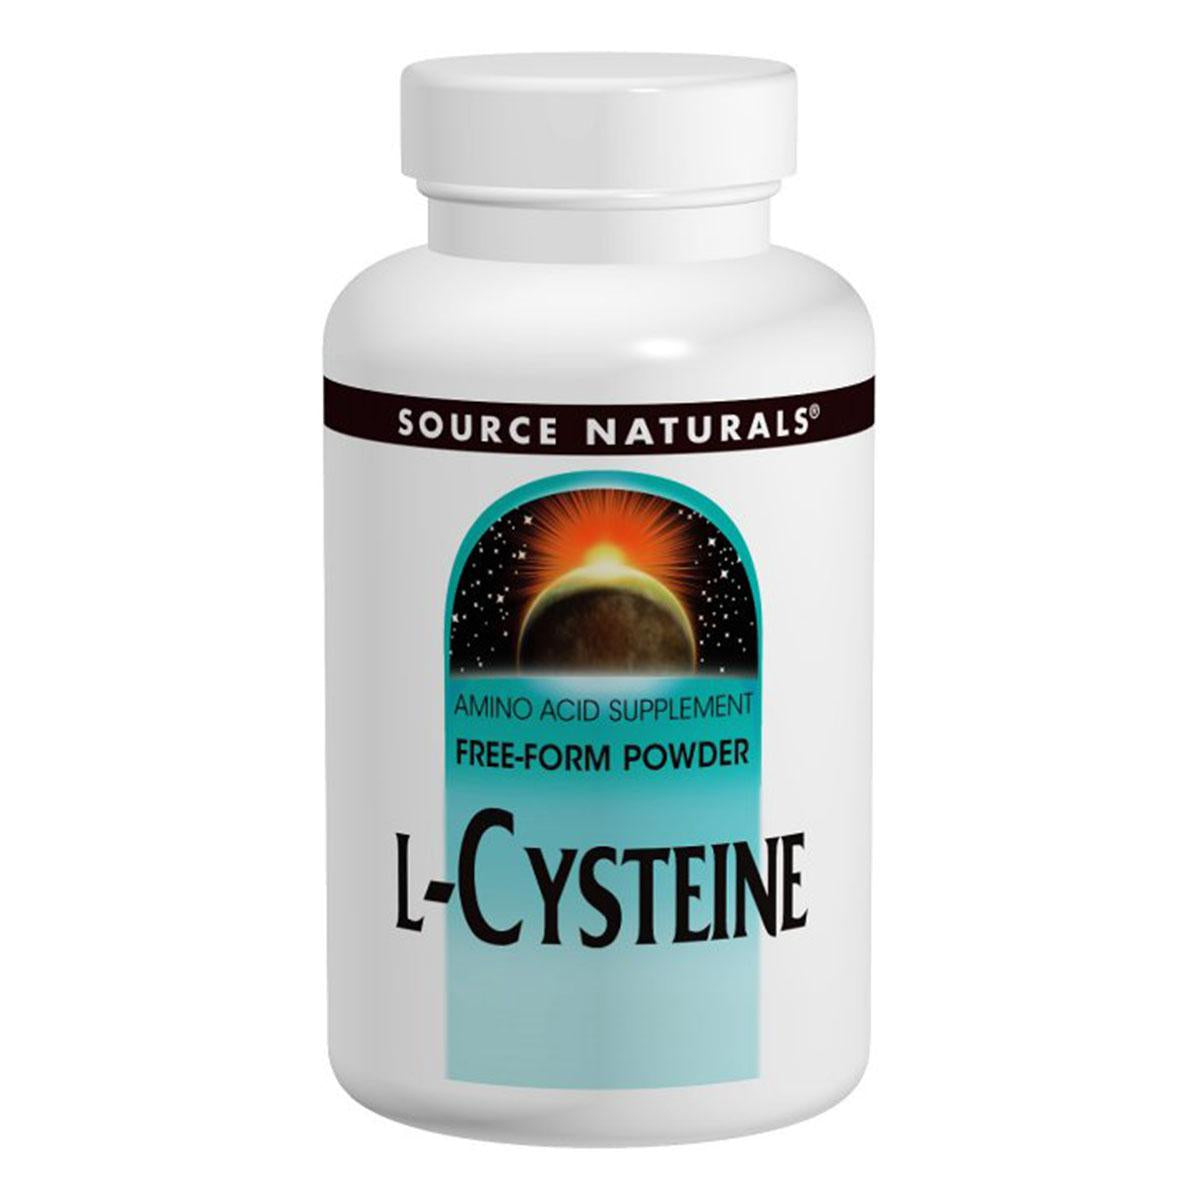 Primary image of L-Cysteine Powder